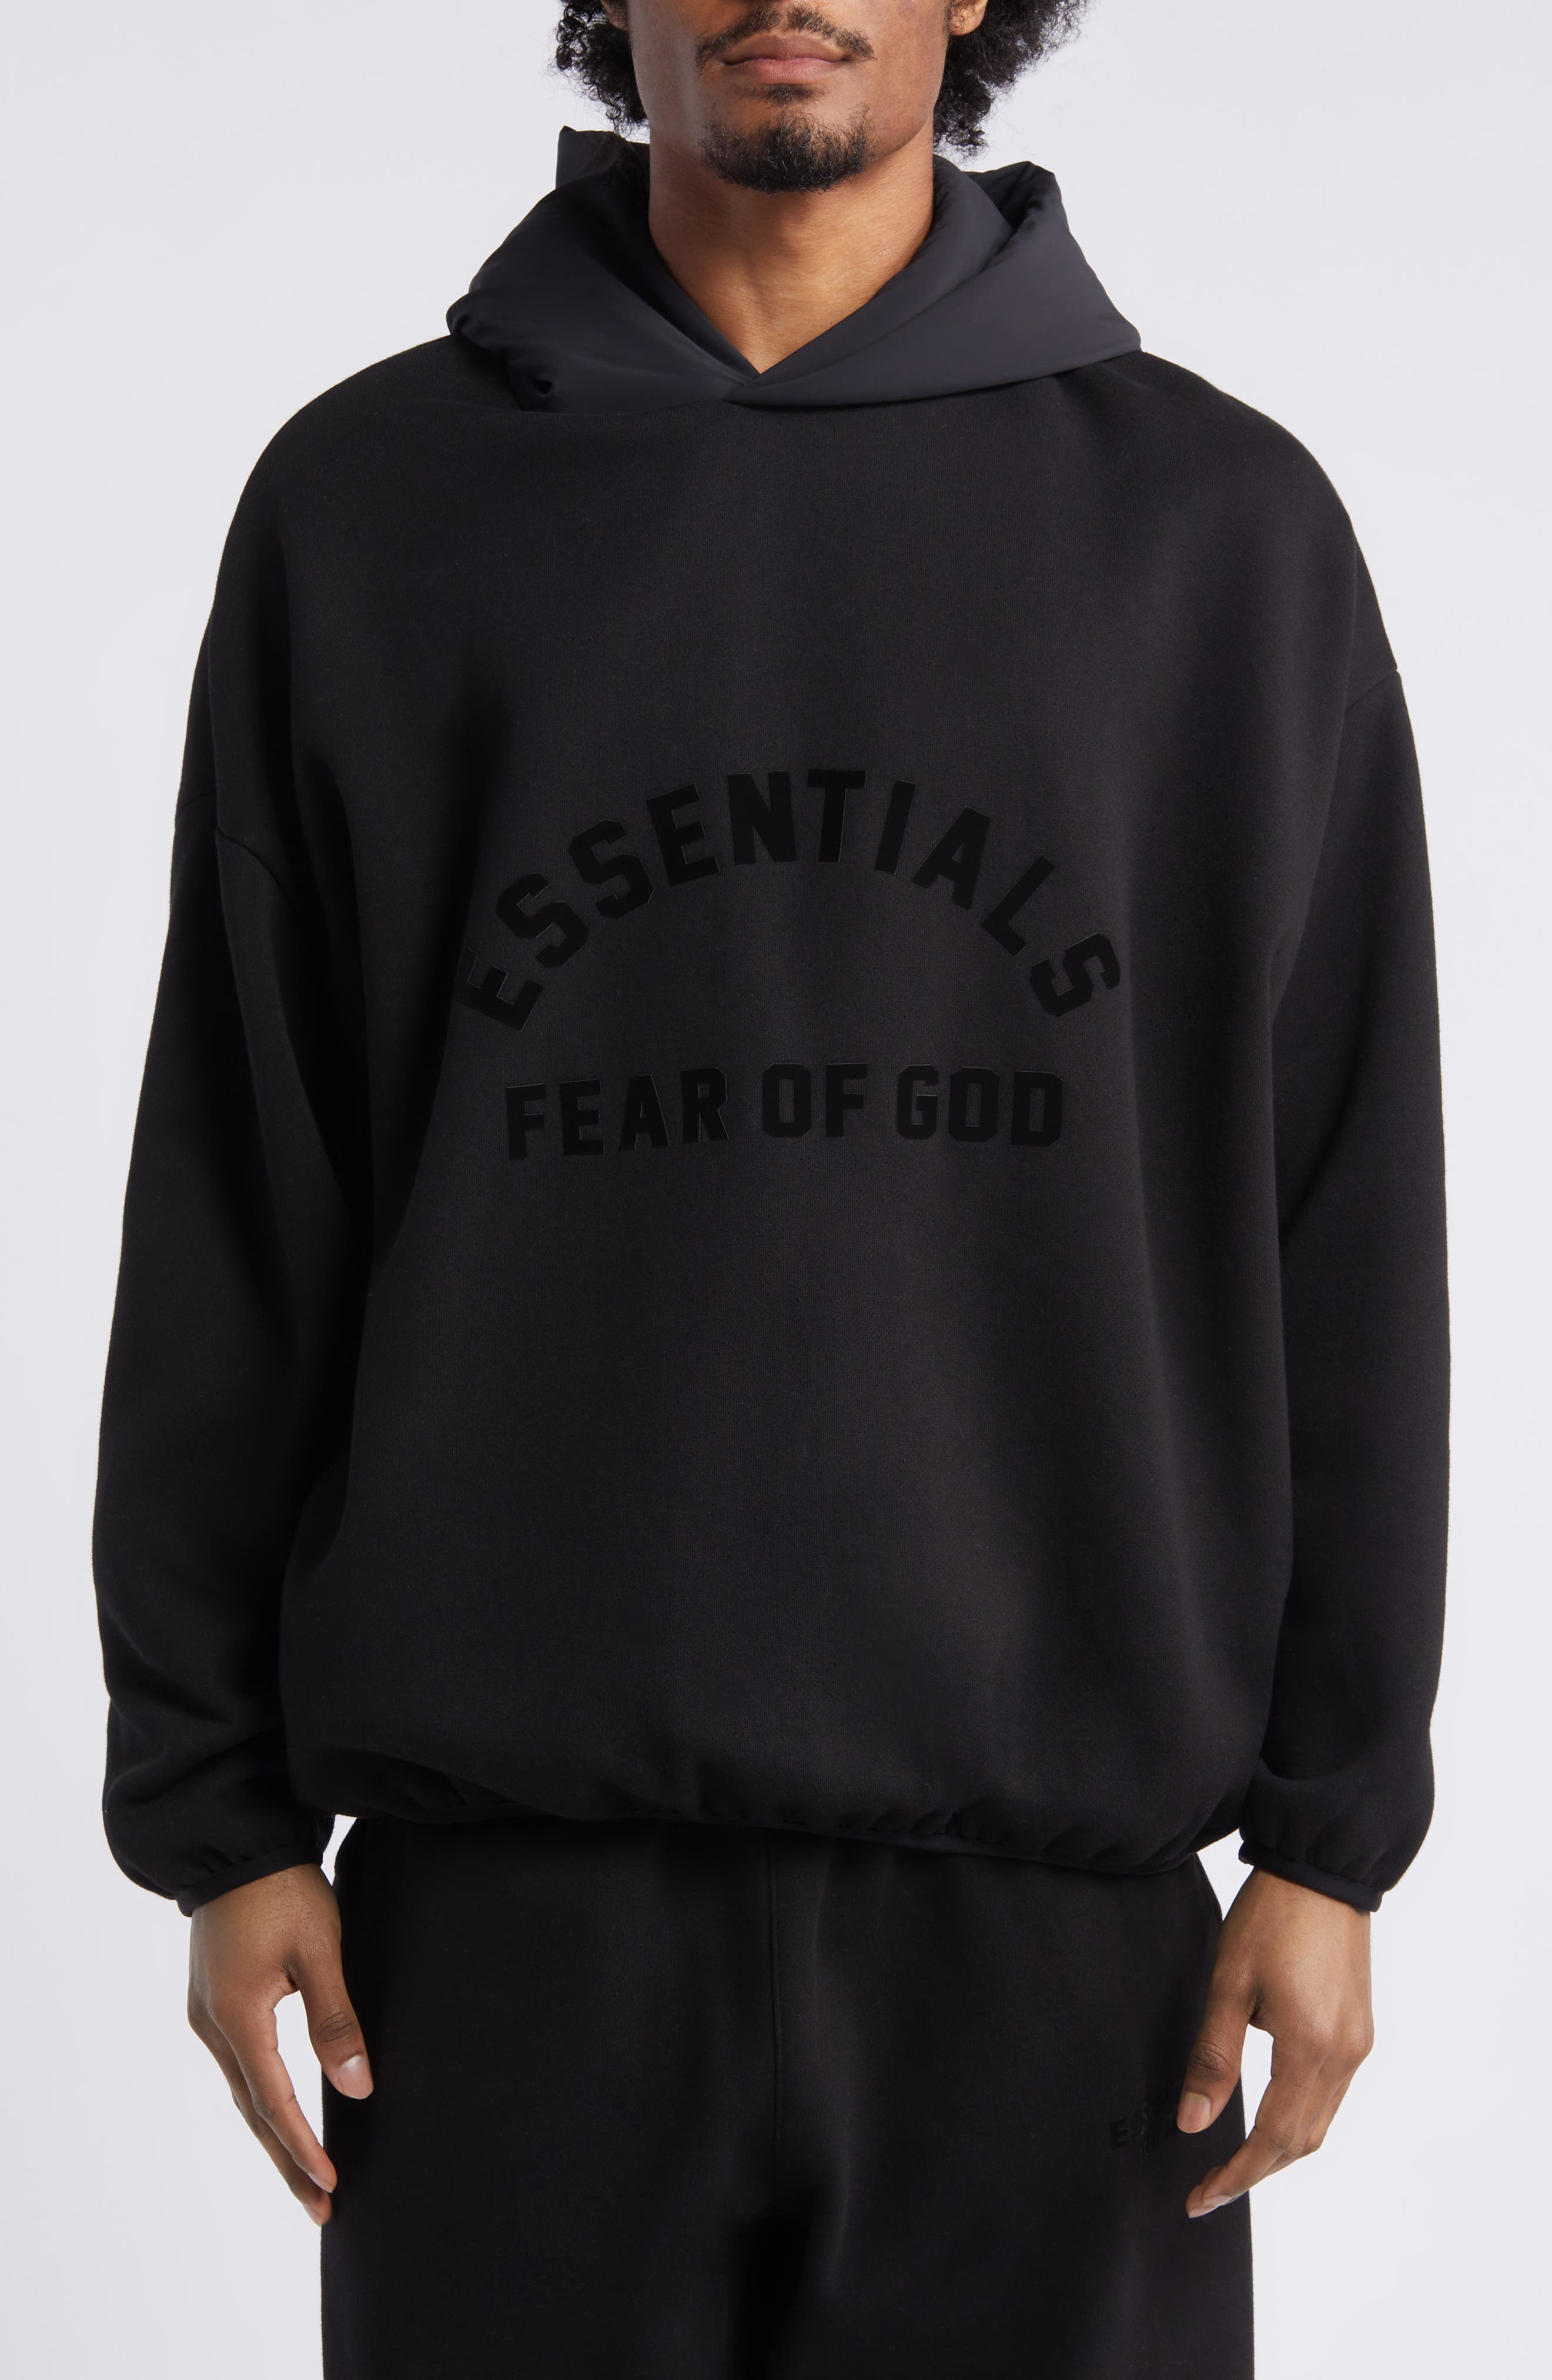 Men's Fear of God Essentials Sweatshirts u0026 Hoodies | Nordstrom